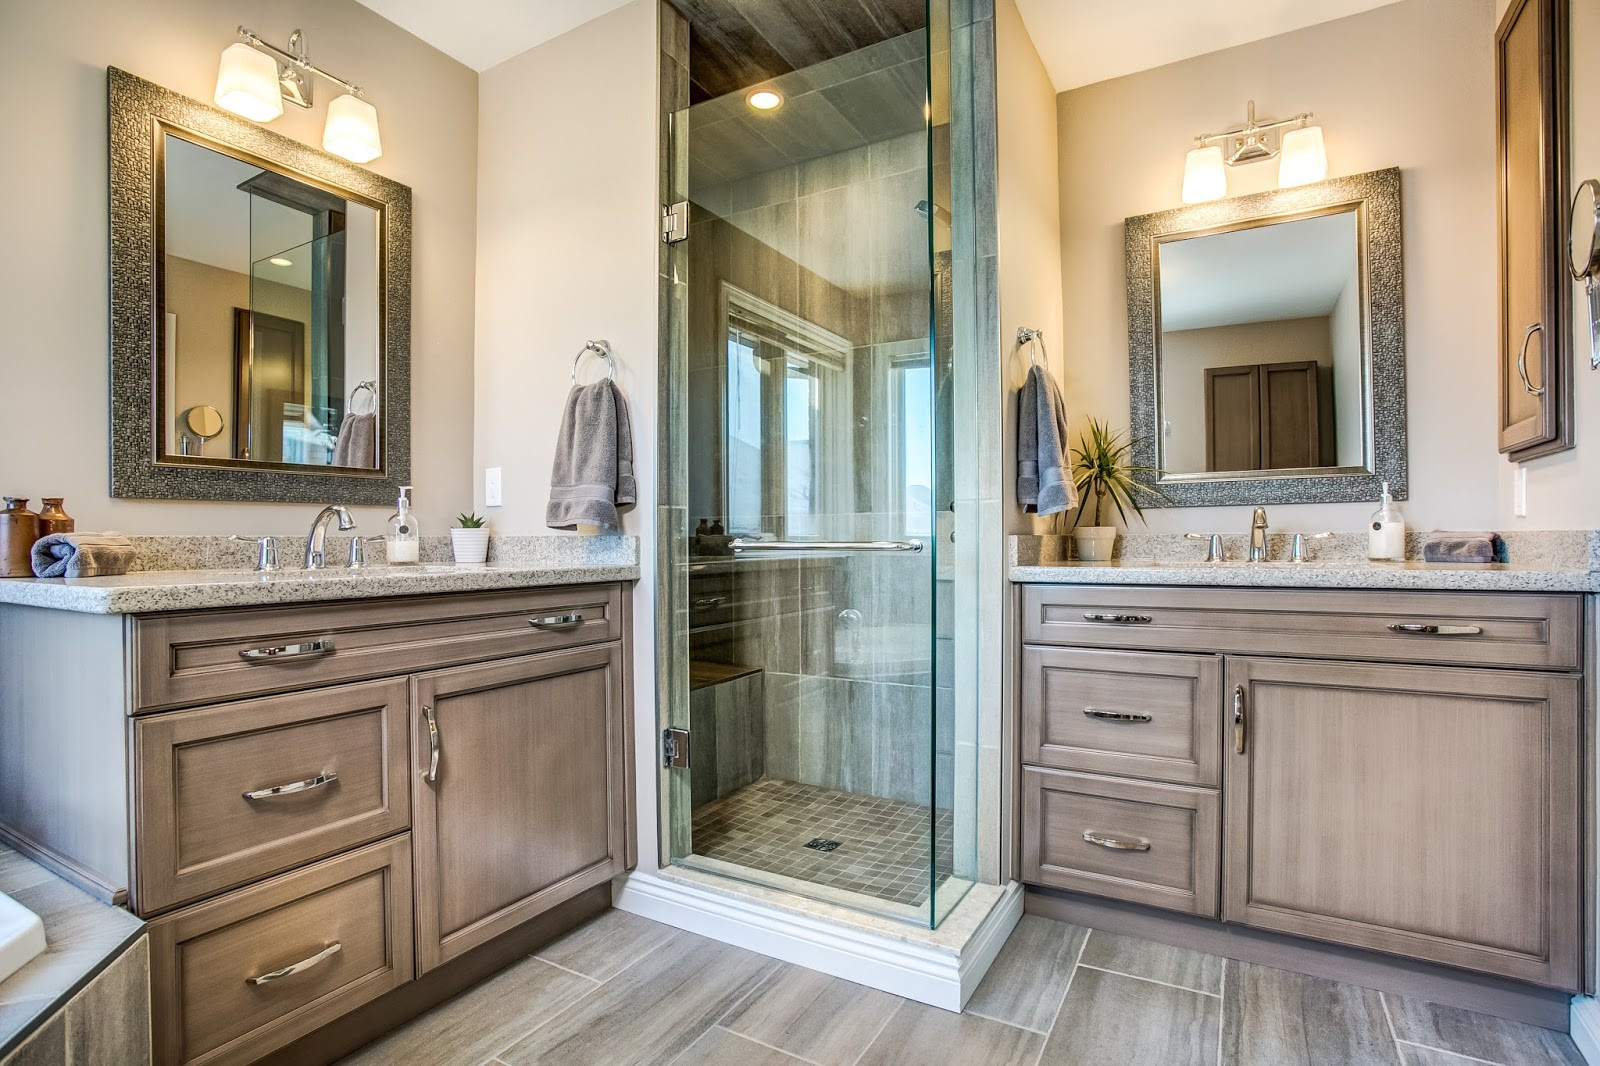 Remodel Bathroom Pictures
 Bathroom Remodel Cost in 2020 Bud Average & Luxury